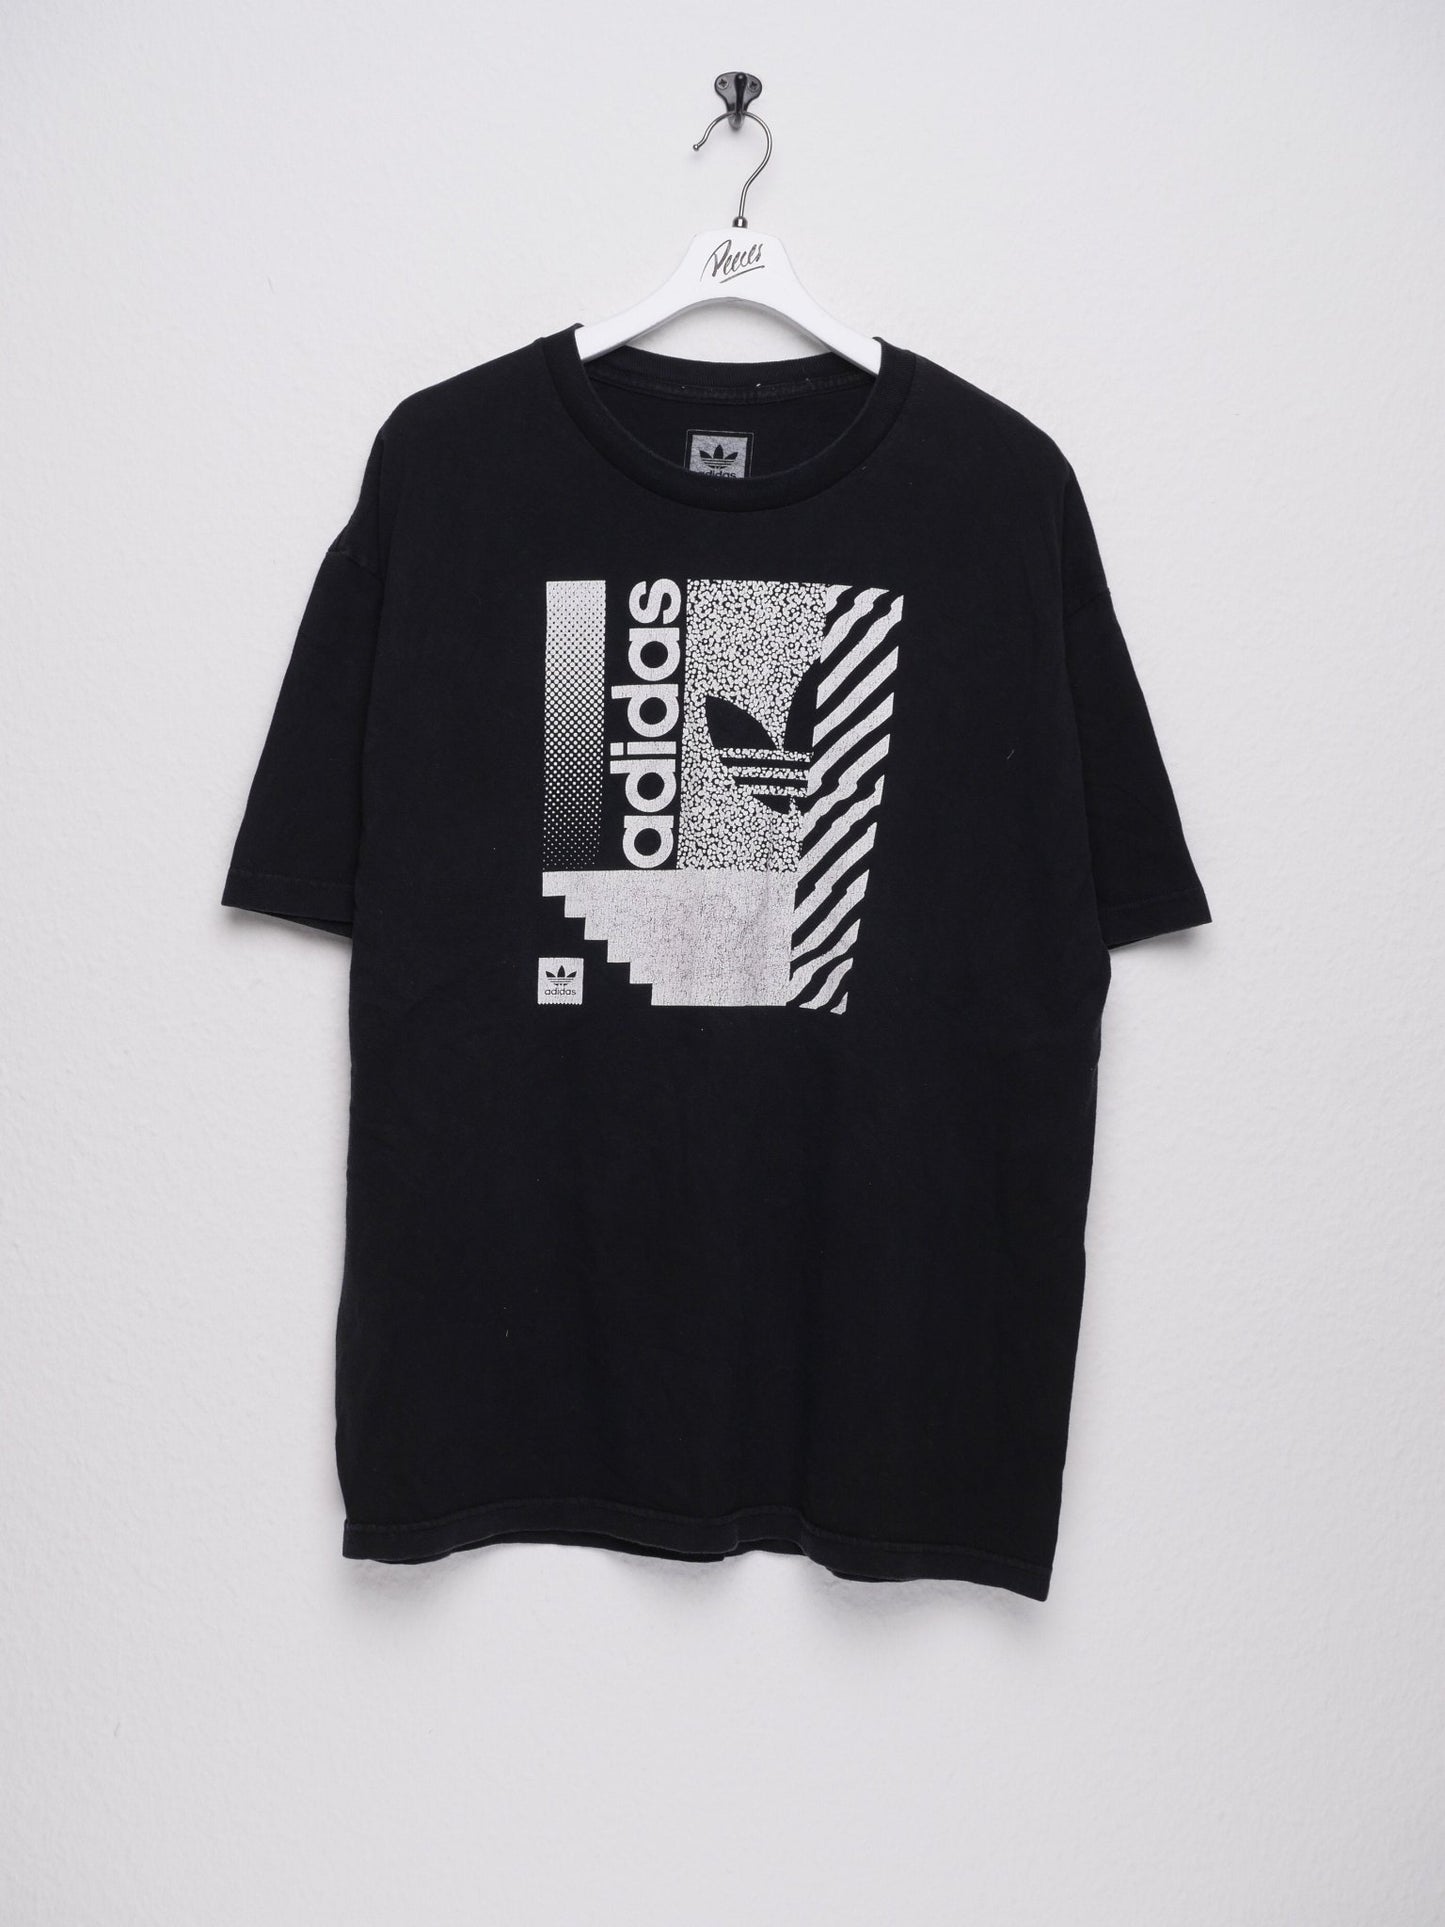 adidas printed Graphic black Shirt - Peeces